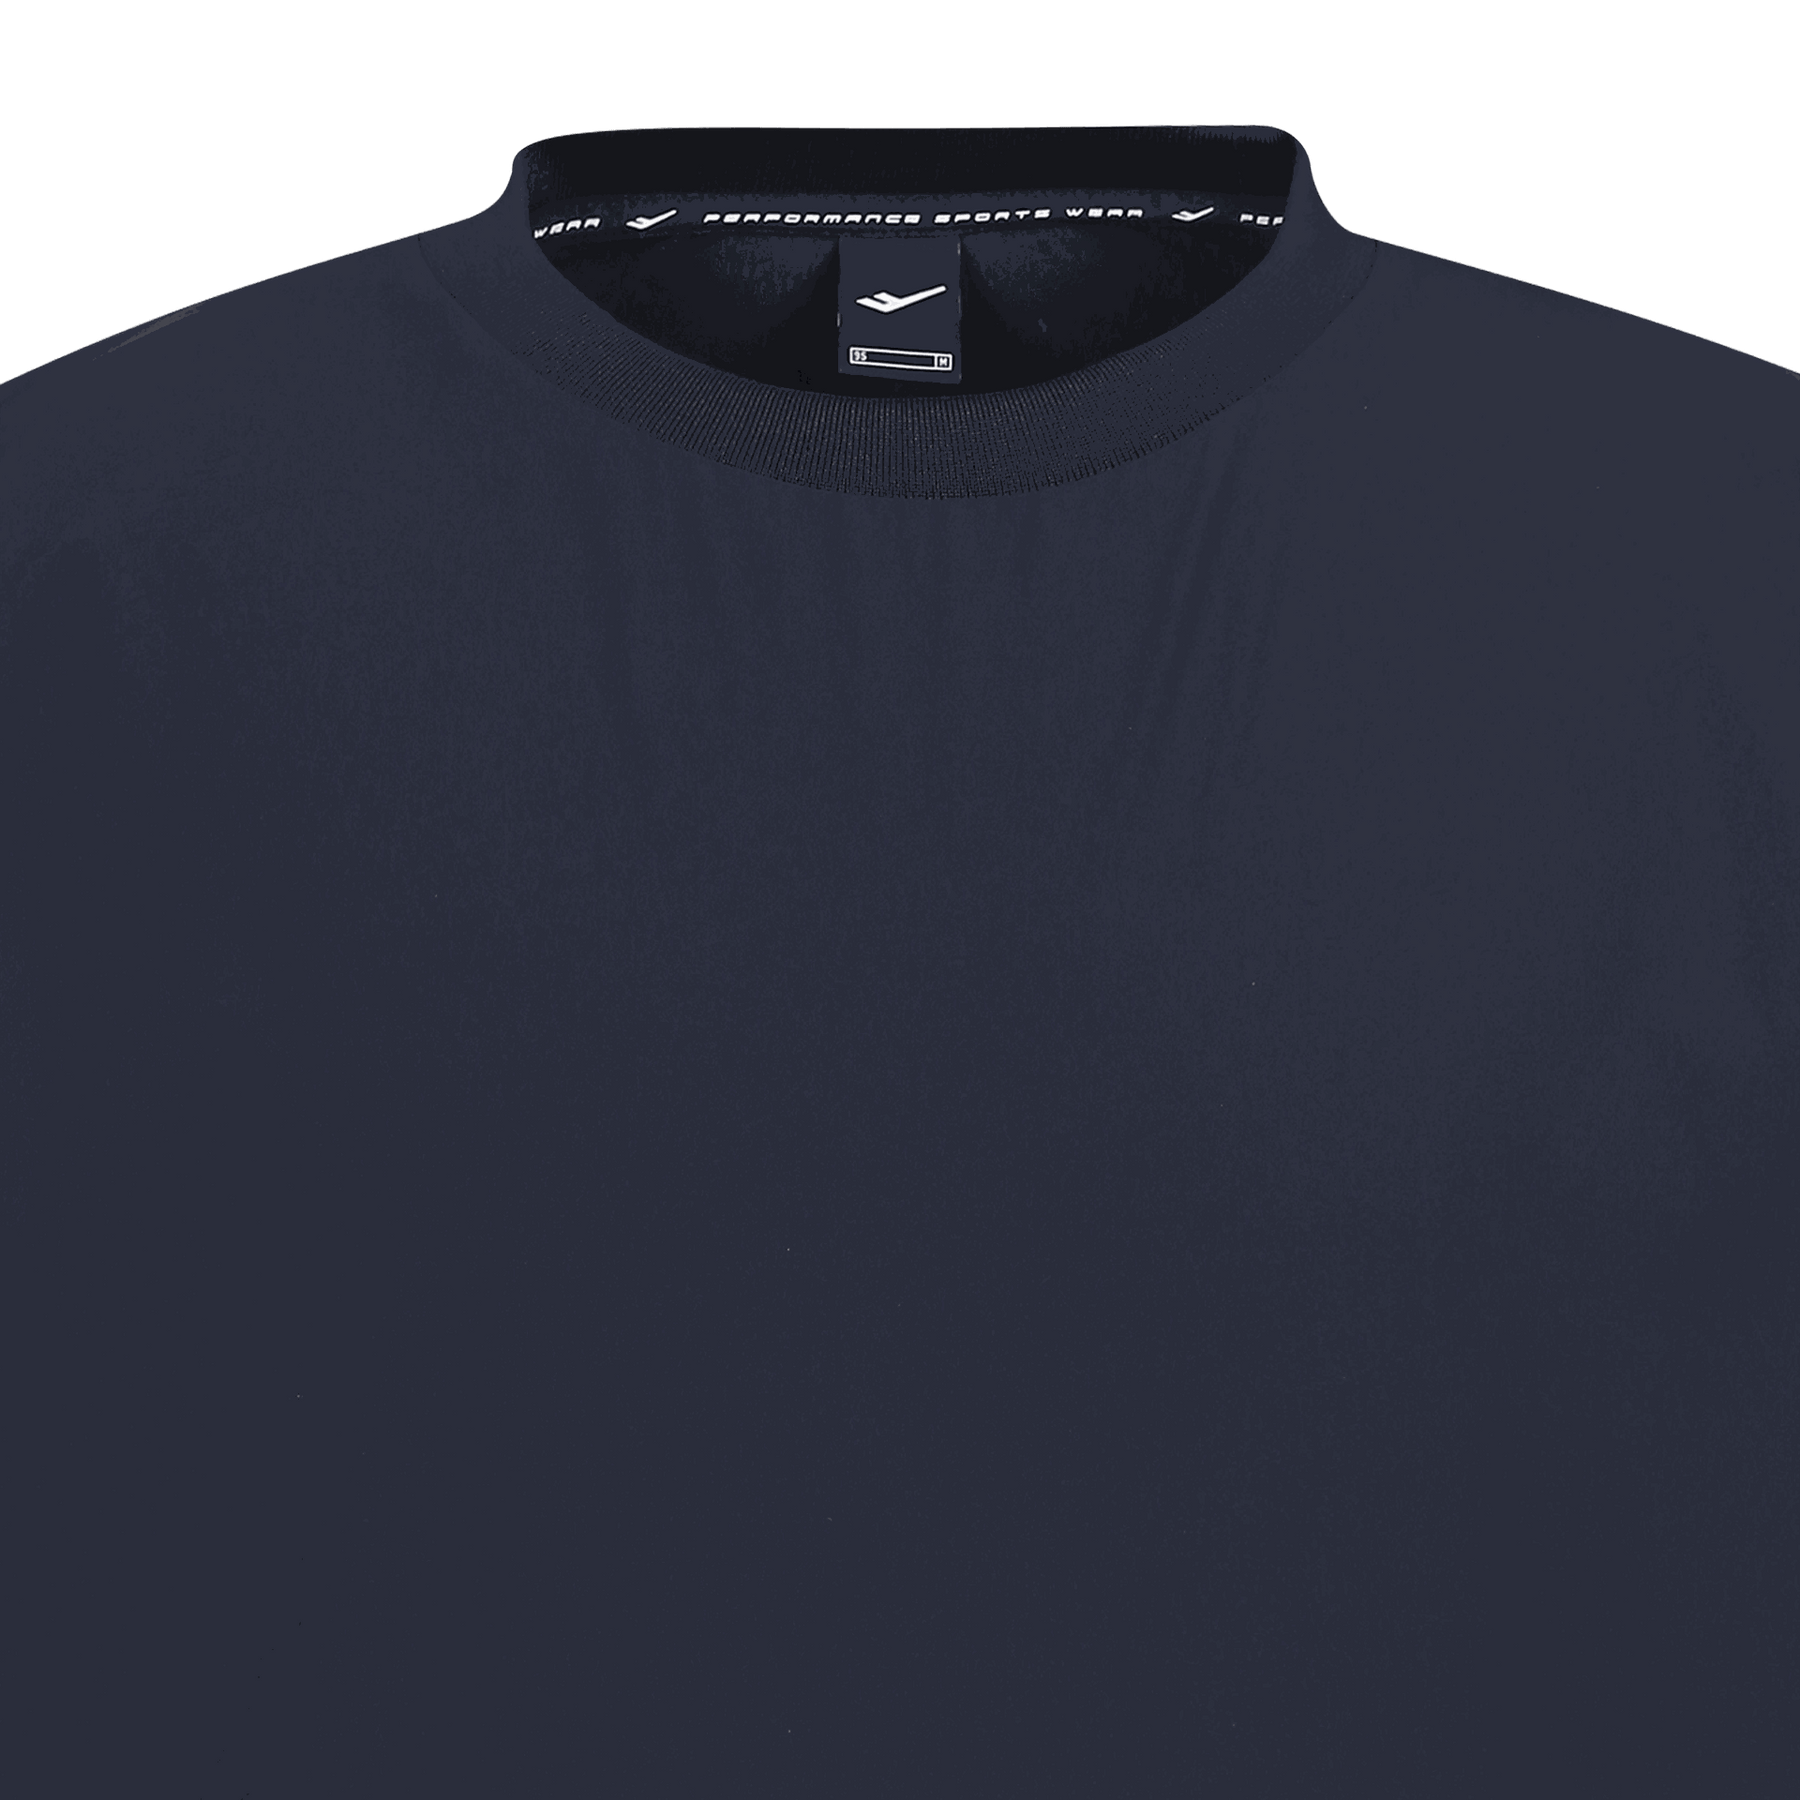 Áo thể thao PROSPECS Nam TM-Clean Round Woven T-Shirt MT-M412